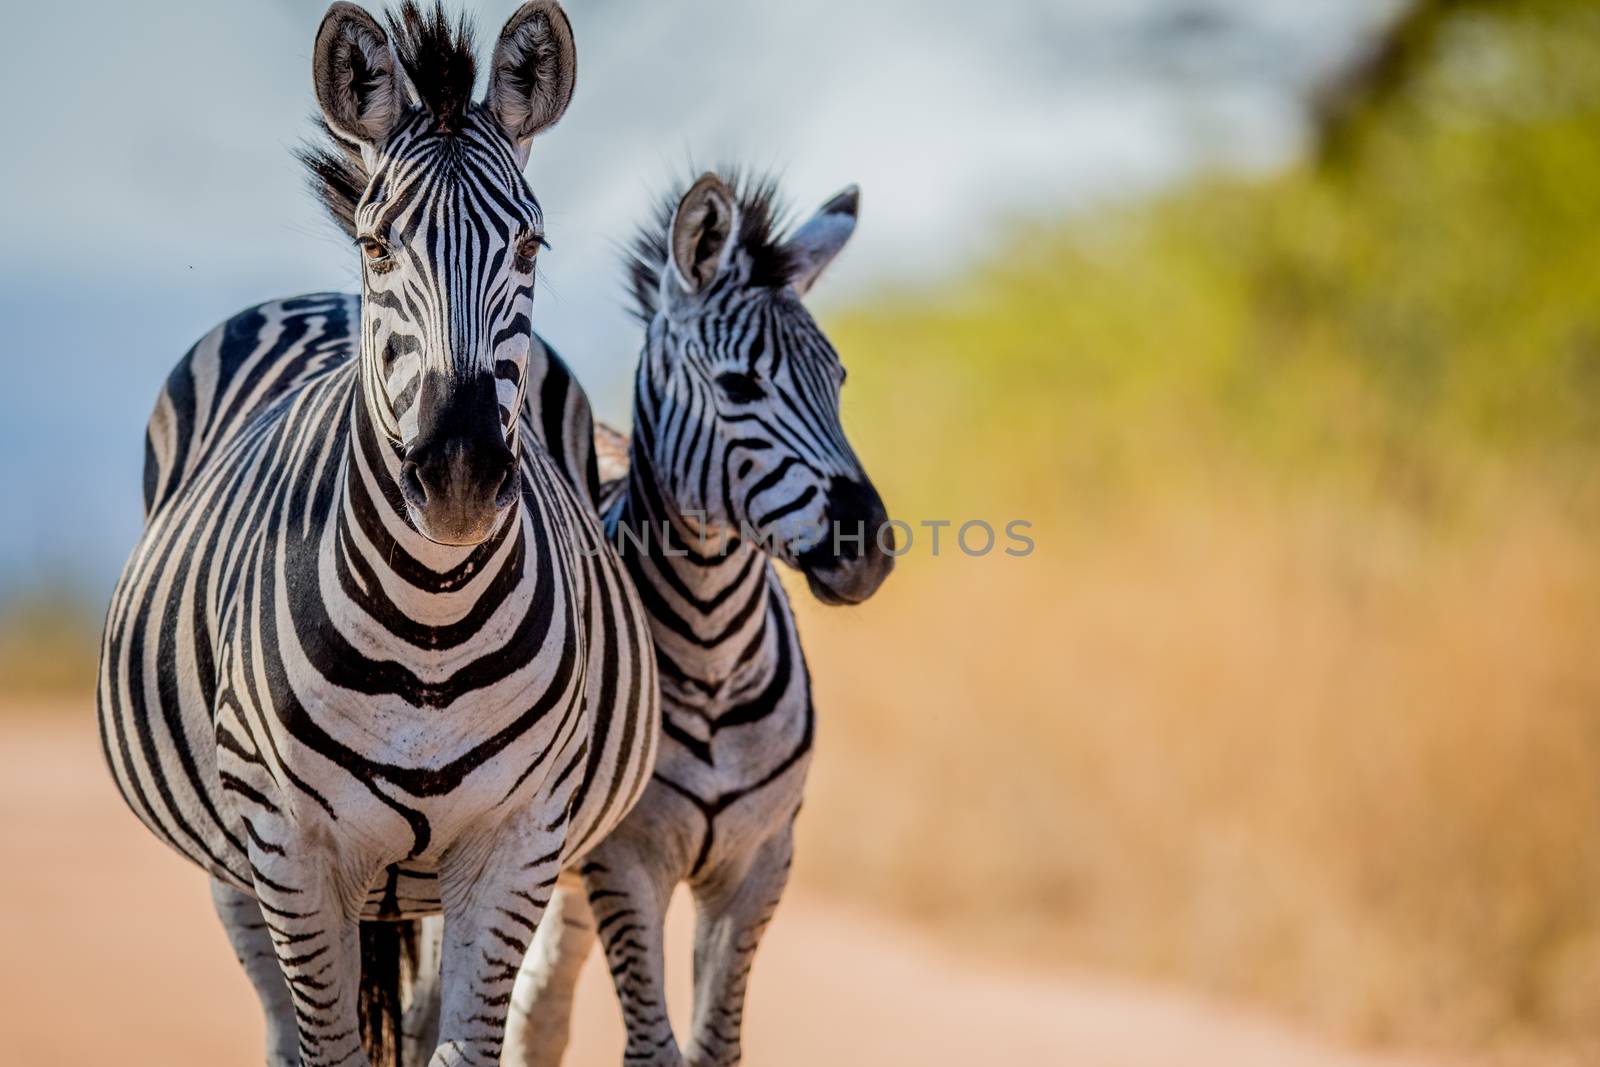 Two Zebras bonding in the Kruger National Park, South Africa.